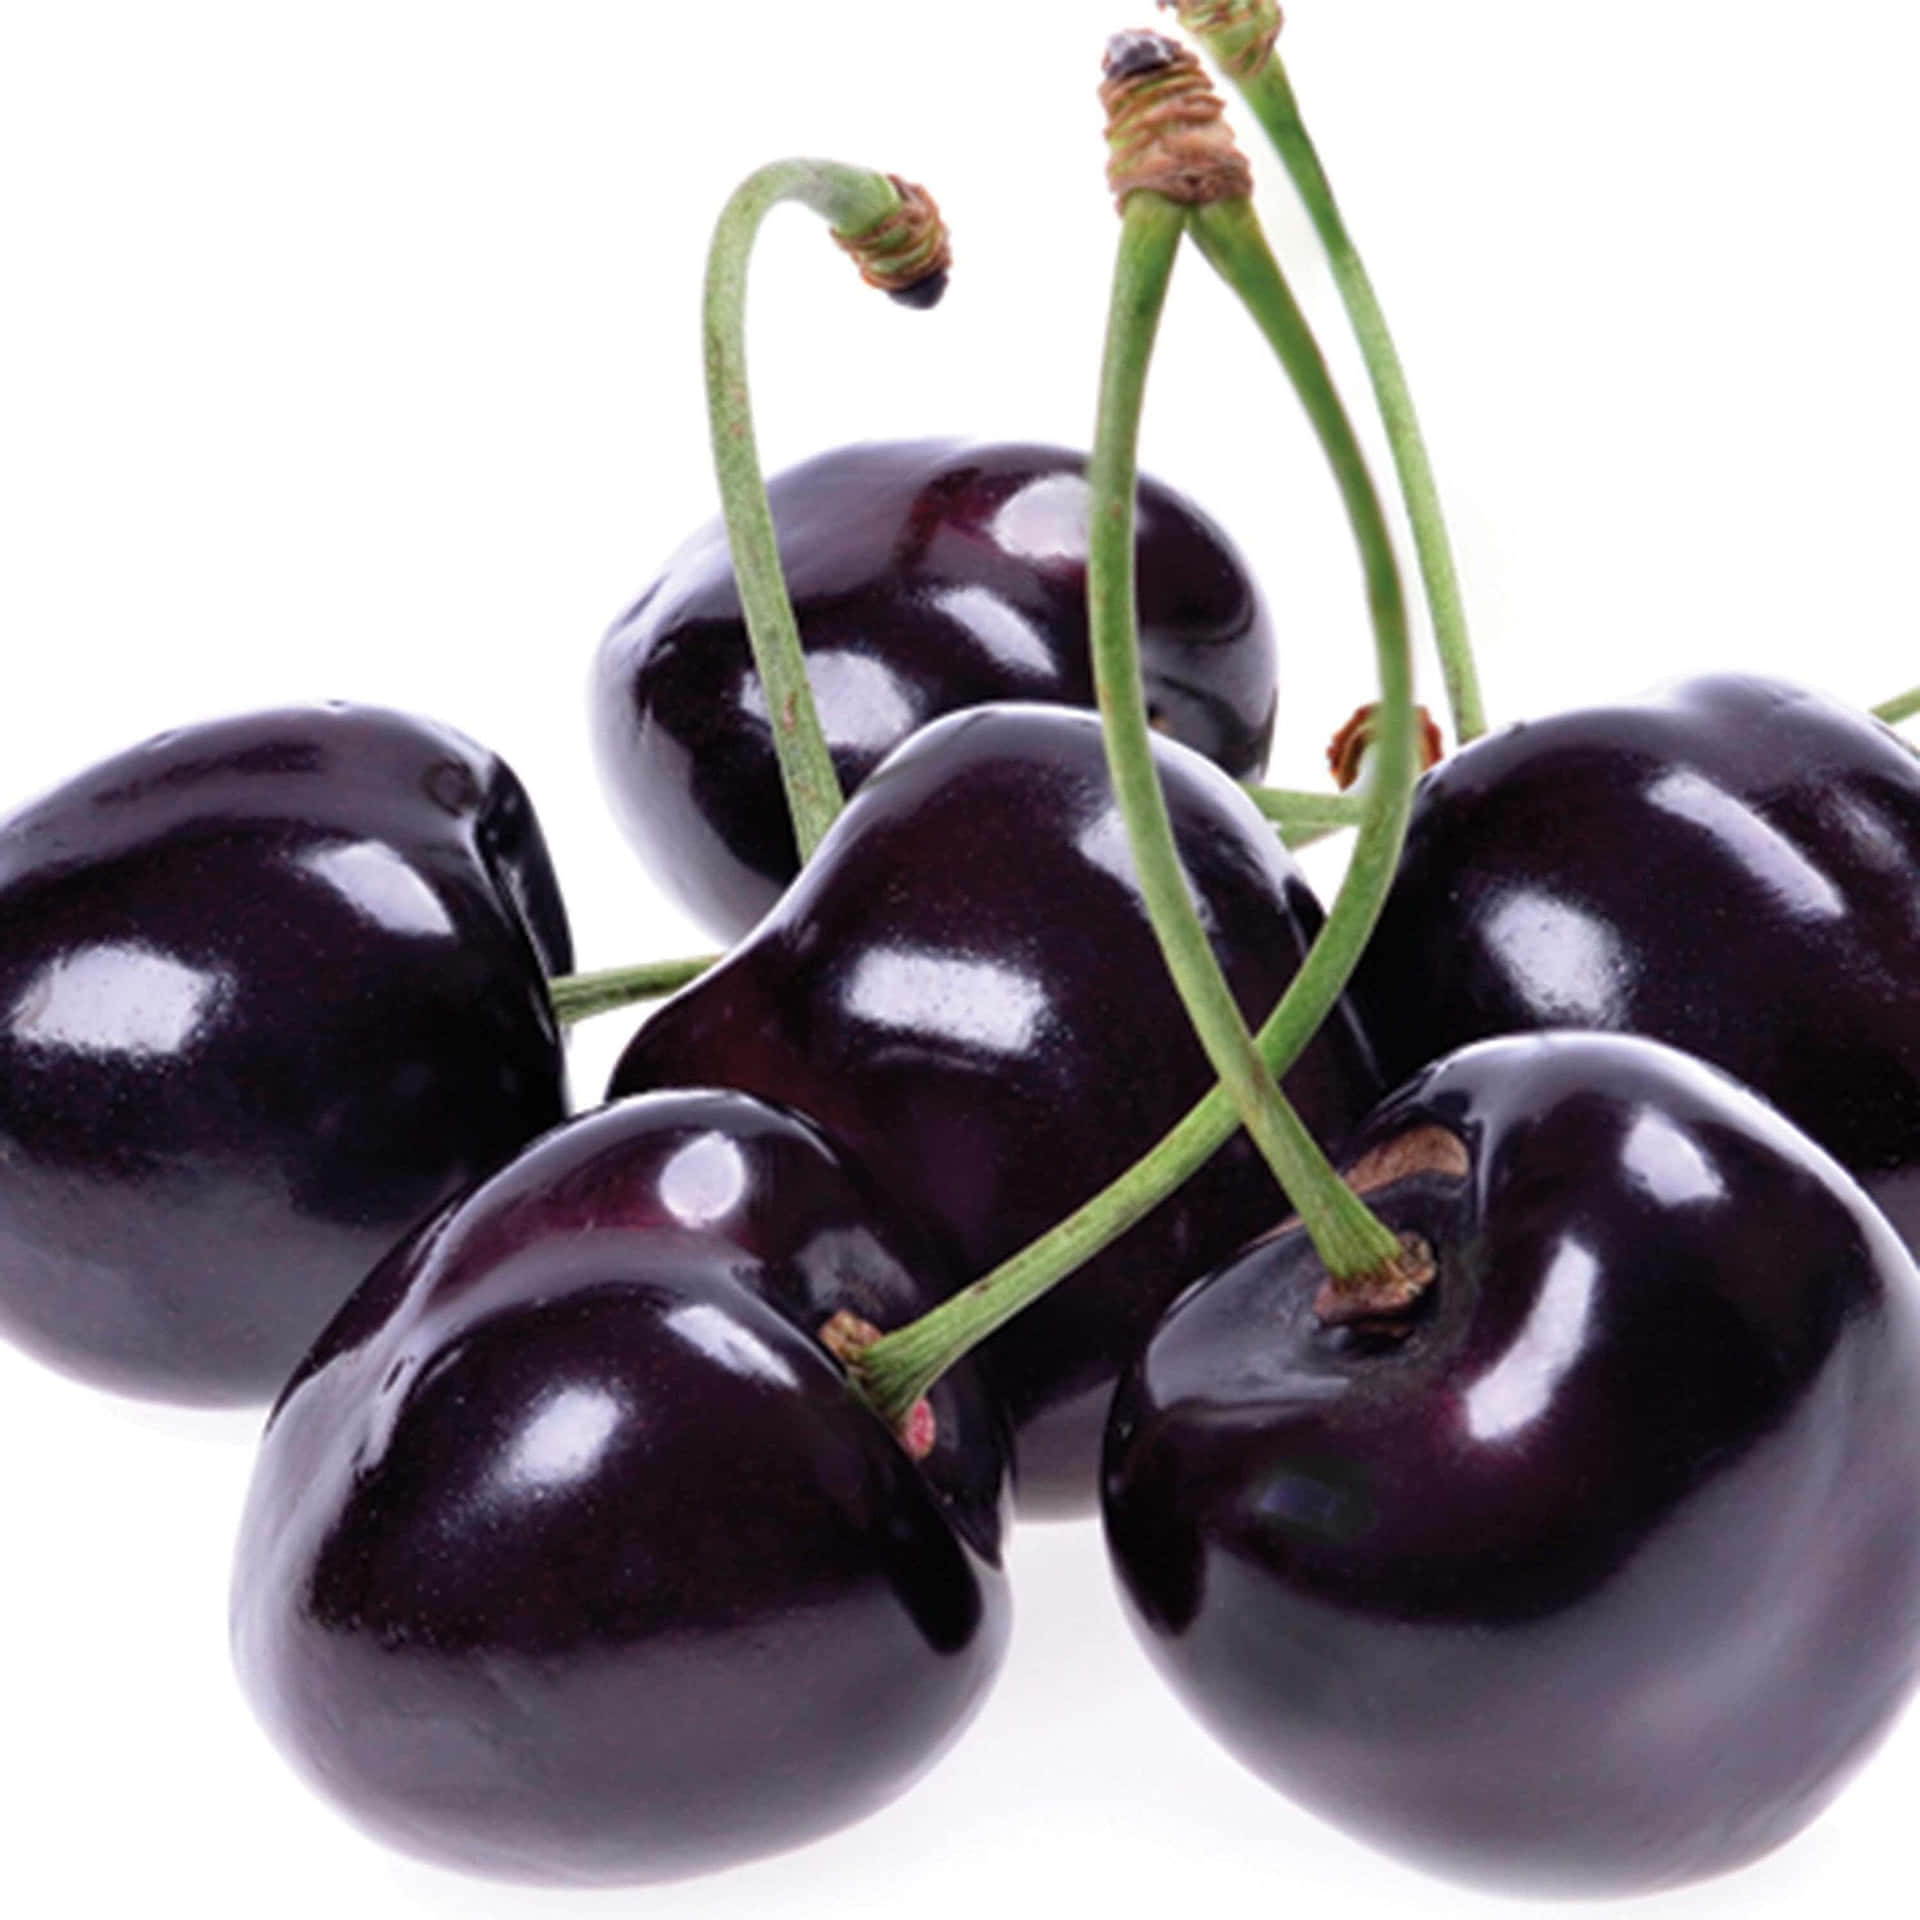 “A bushel of black cherries fresh from the farm.” Wallpaper